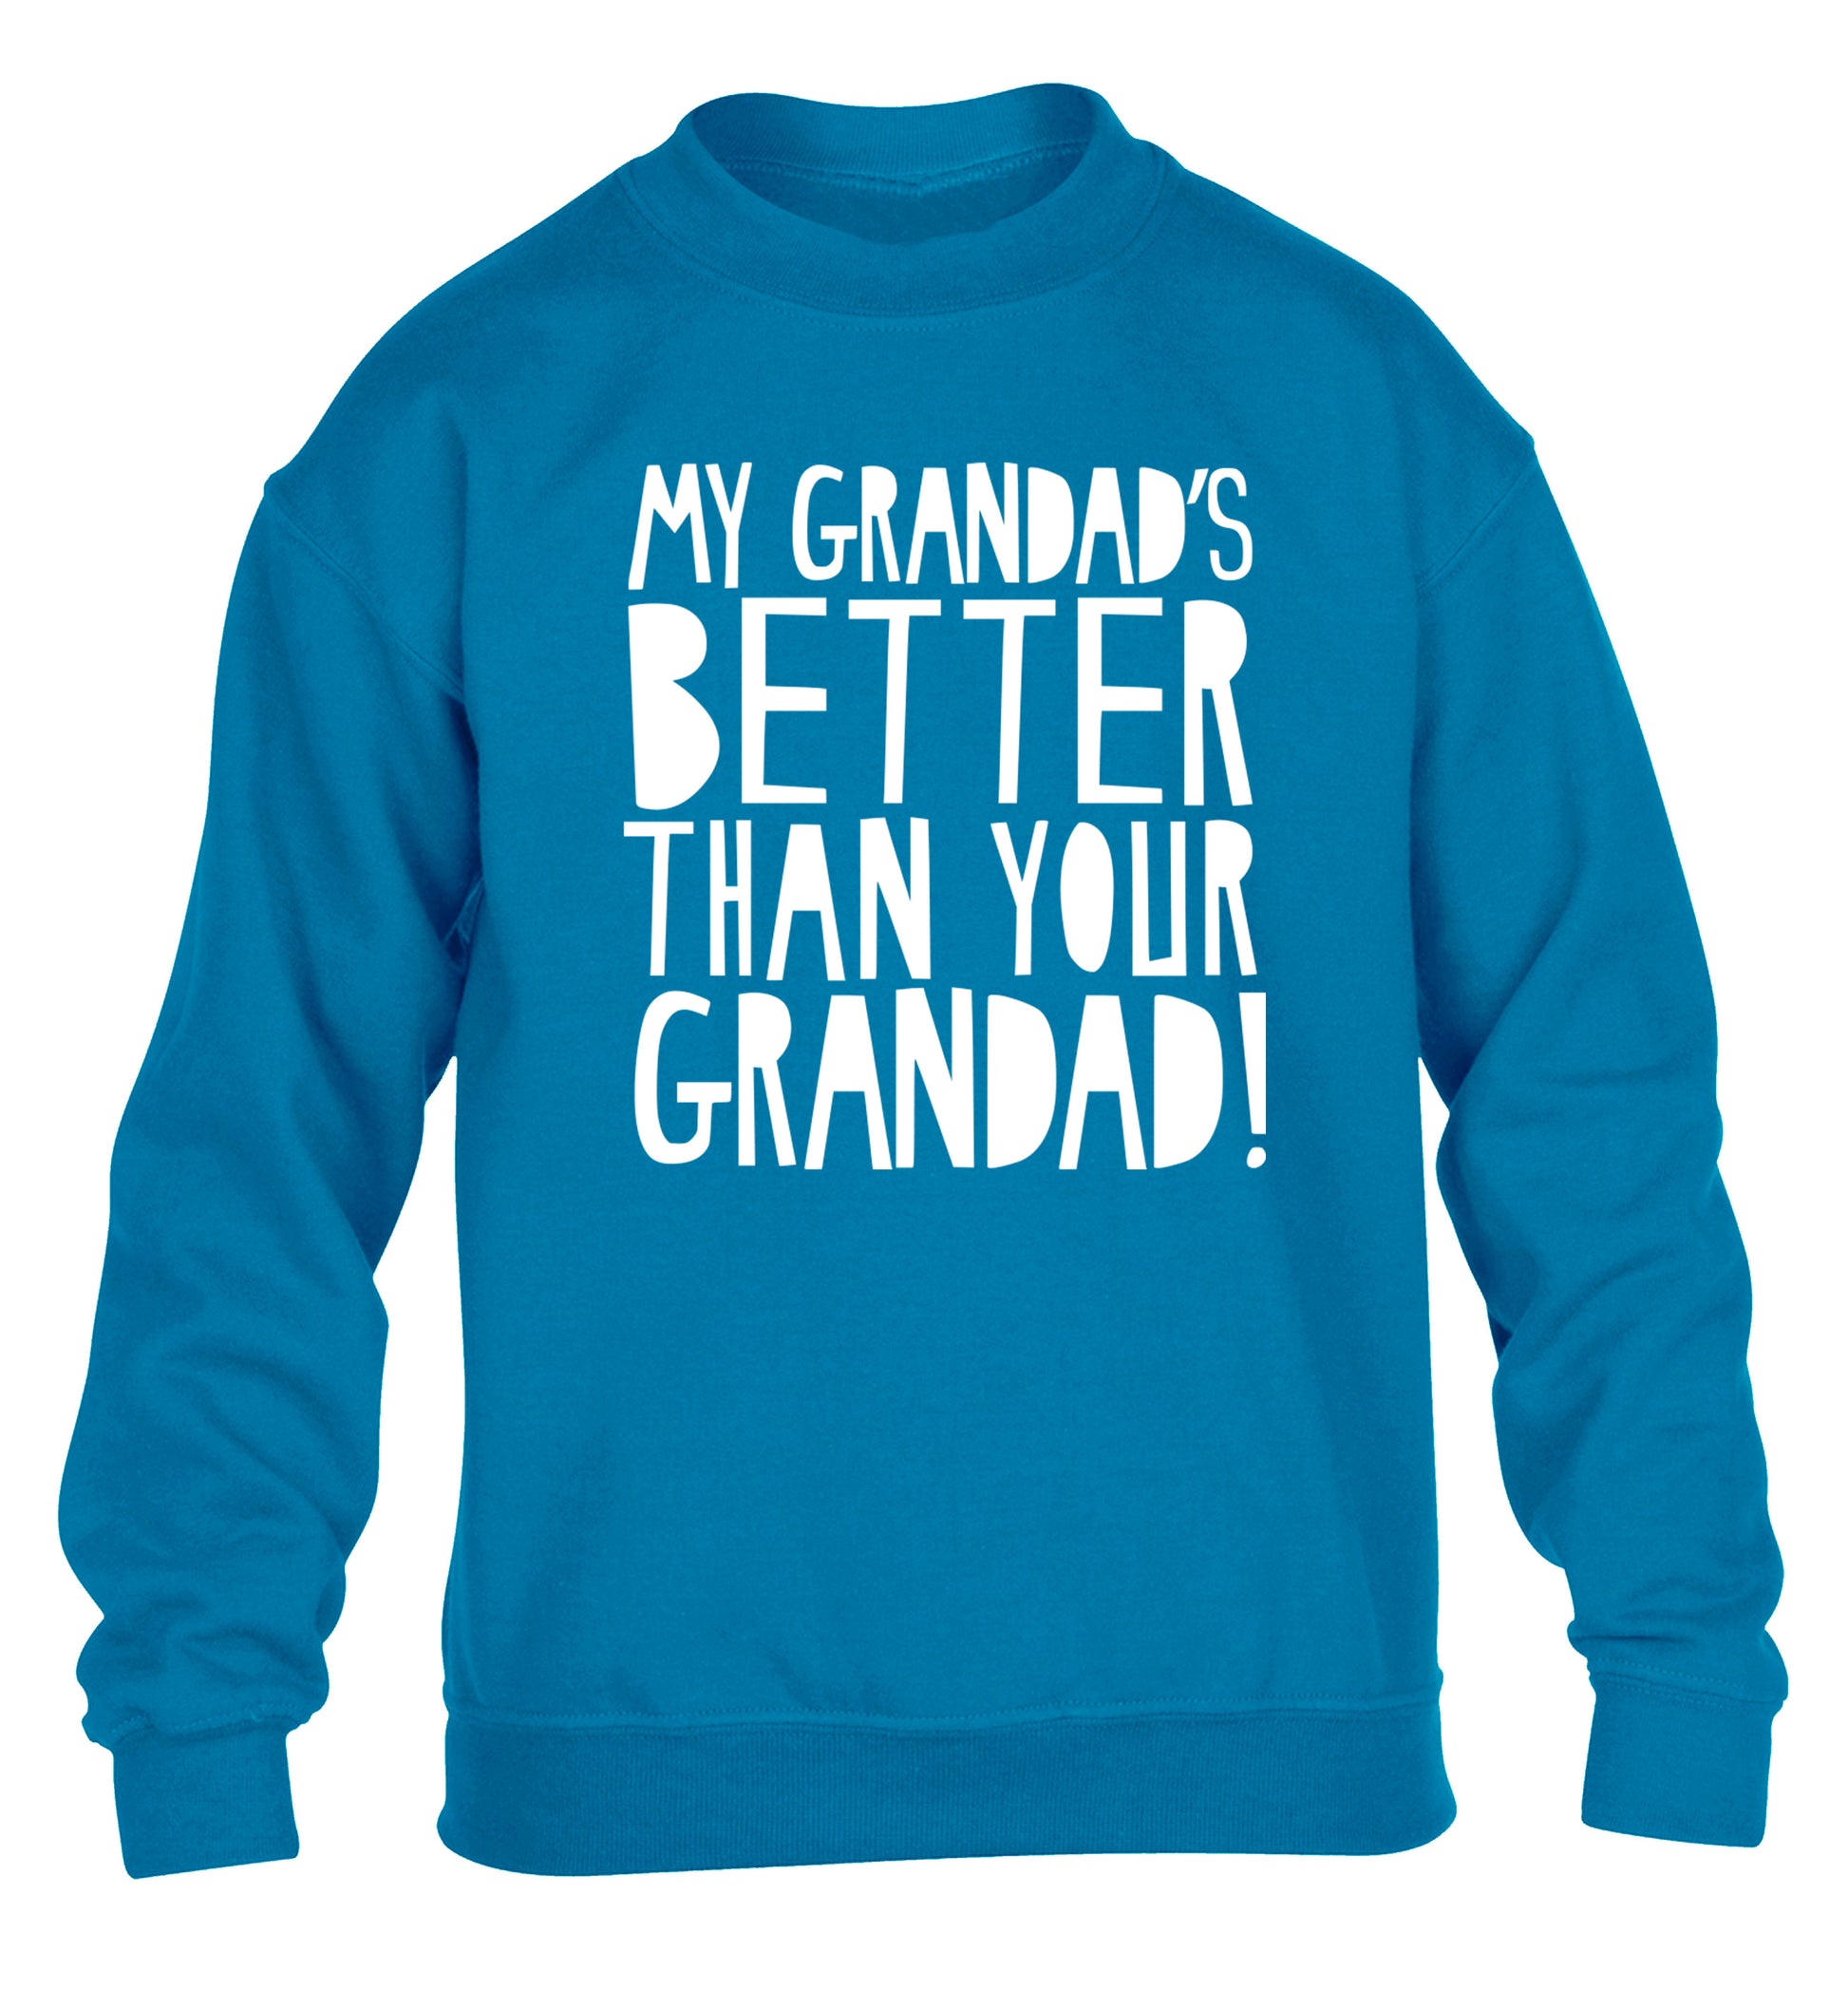 My Grandad's better than your grandad children's blue sweater 12-13 Years